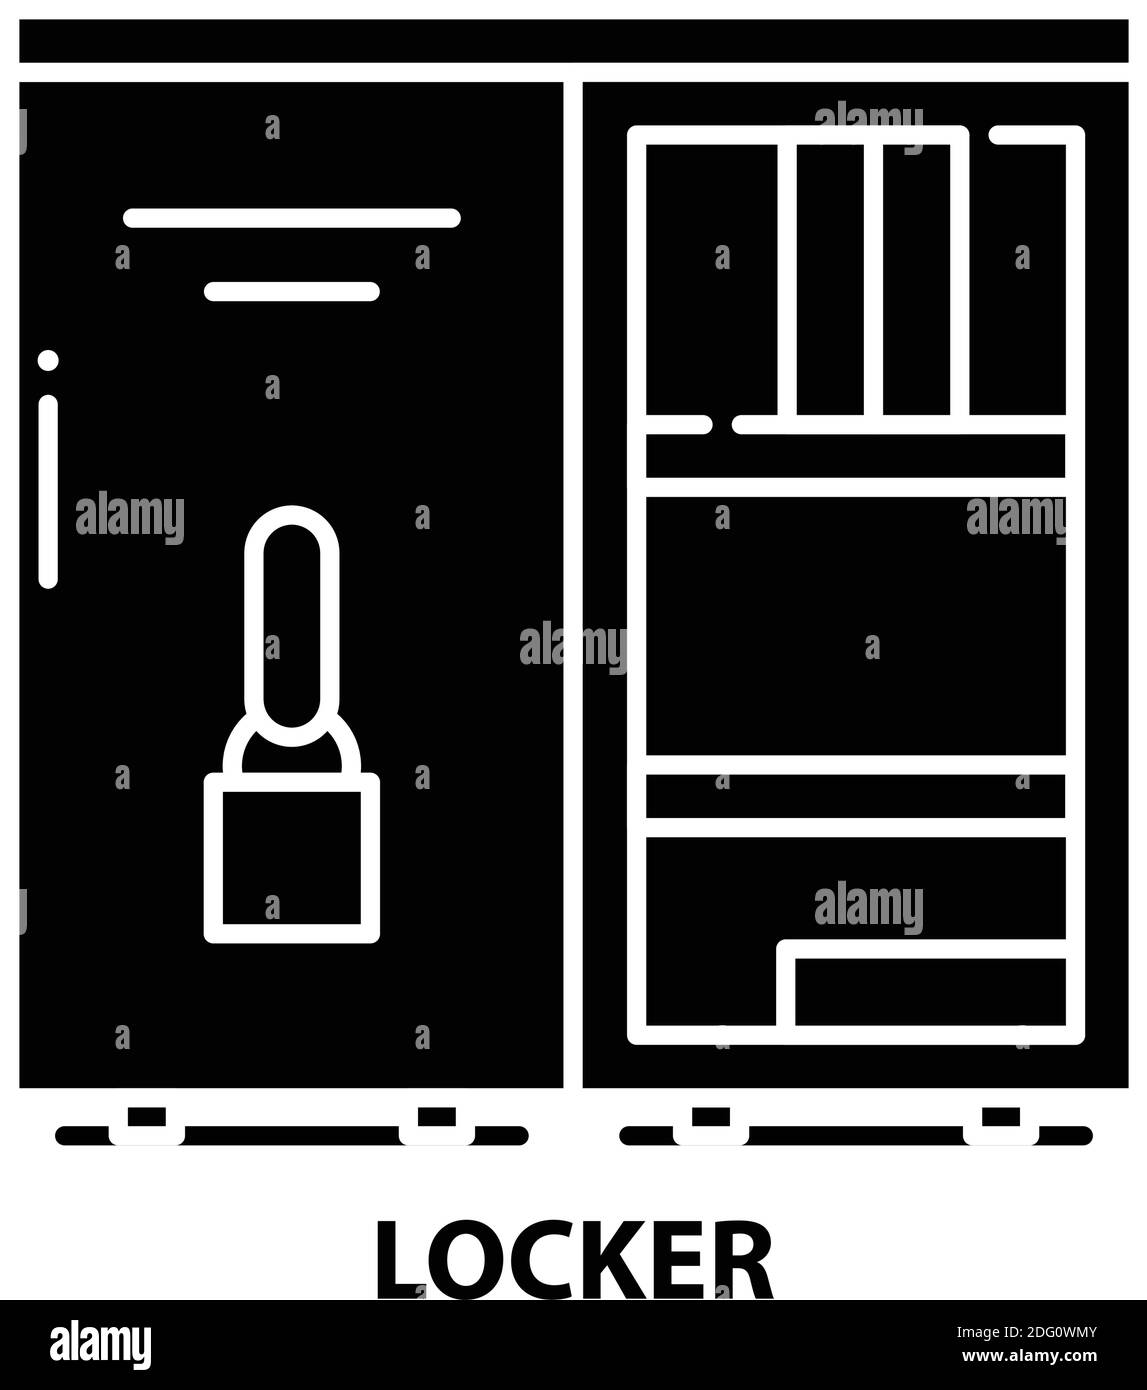 locker icon, black vector sign with editable strokes, concept illustration Stock Vector